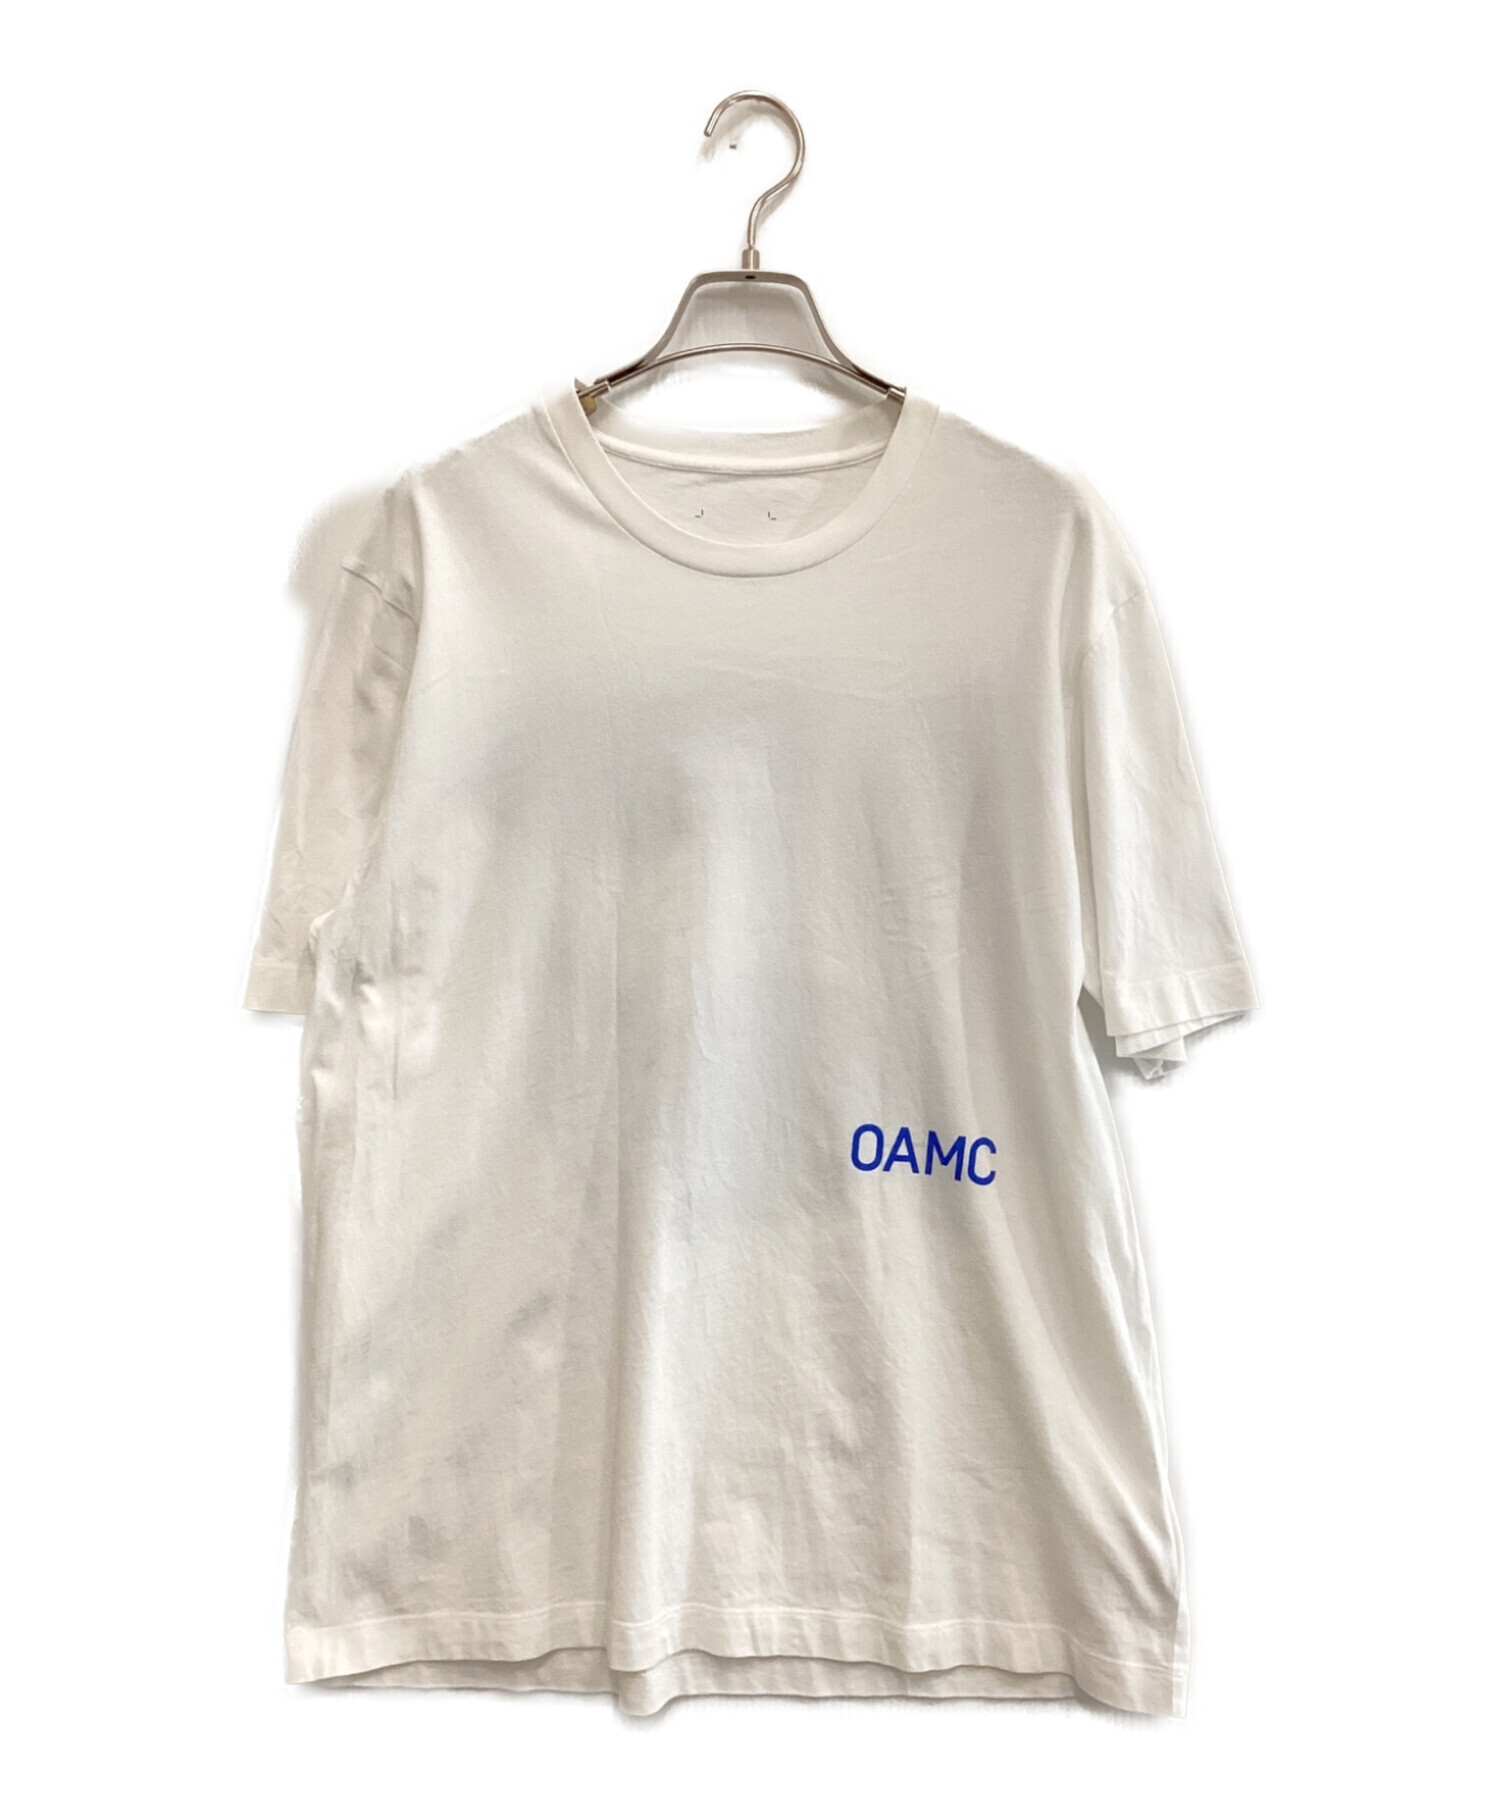 OAMC (オーエーエムシー) Tシャツ ホワイト サイズ:S